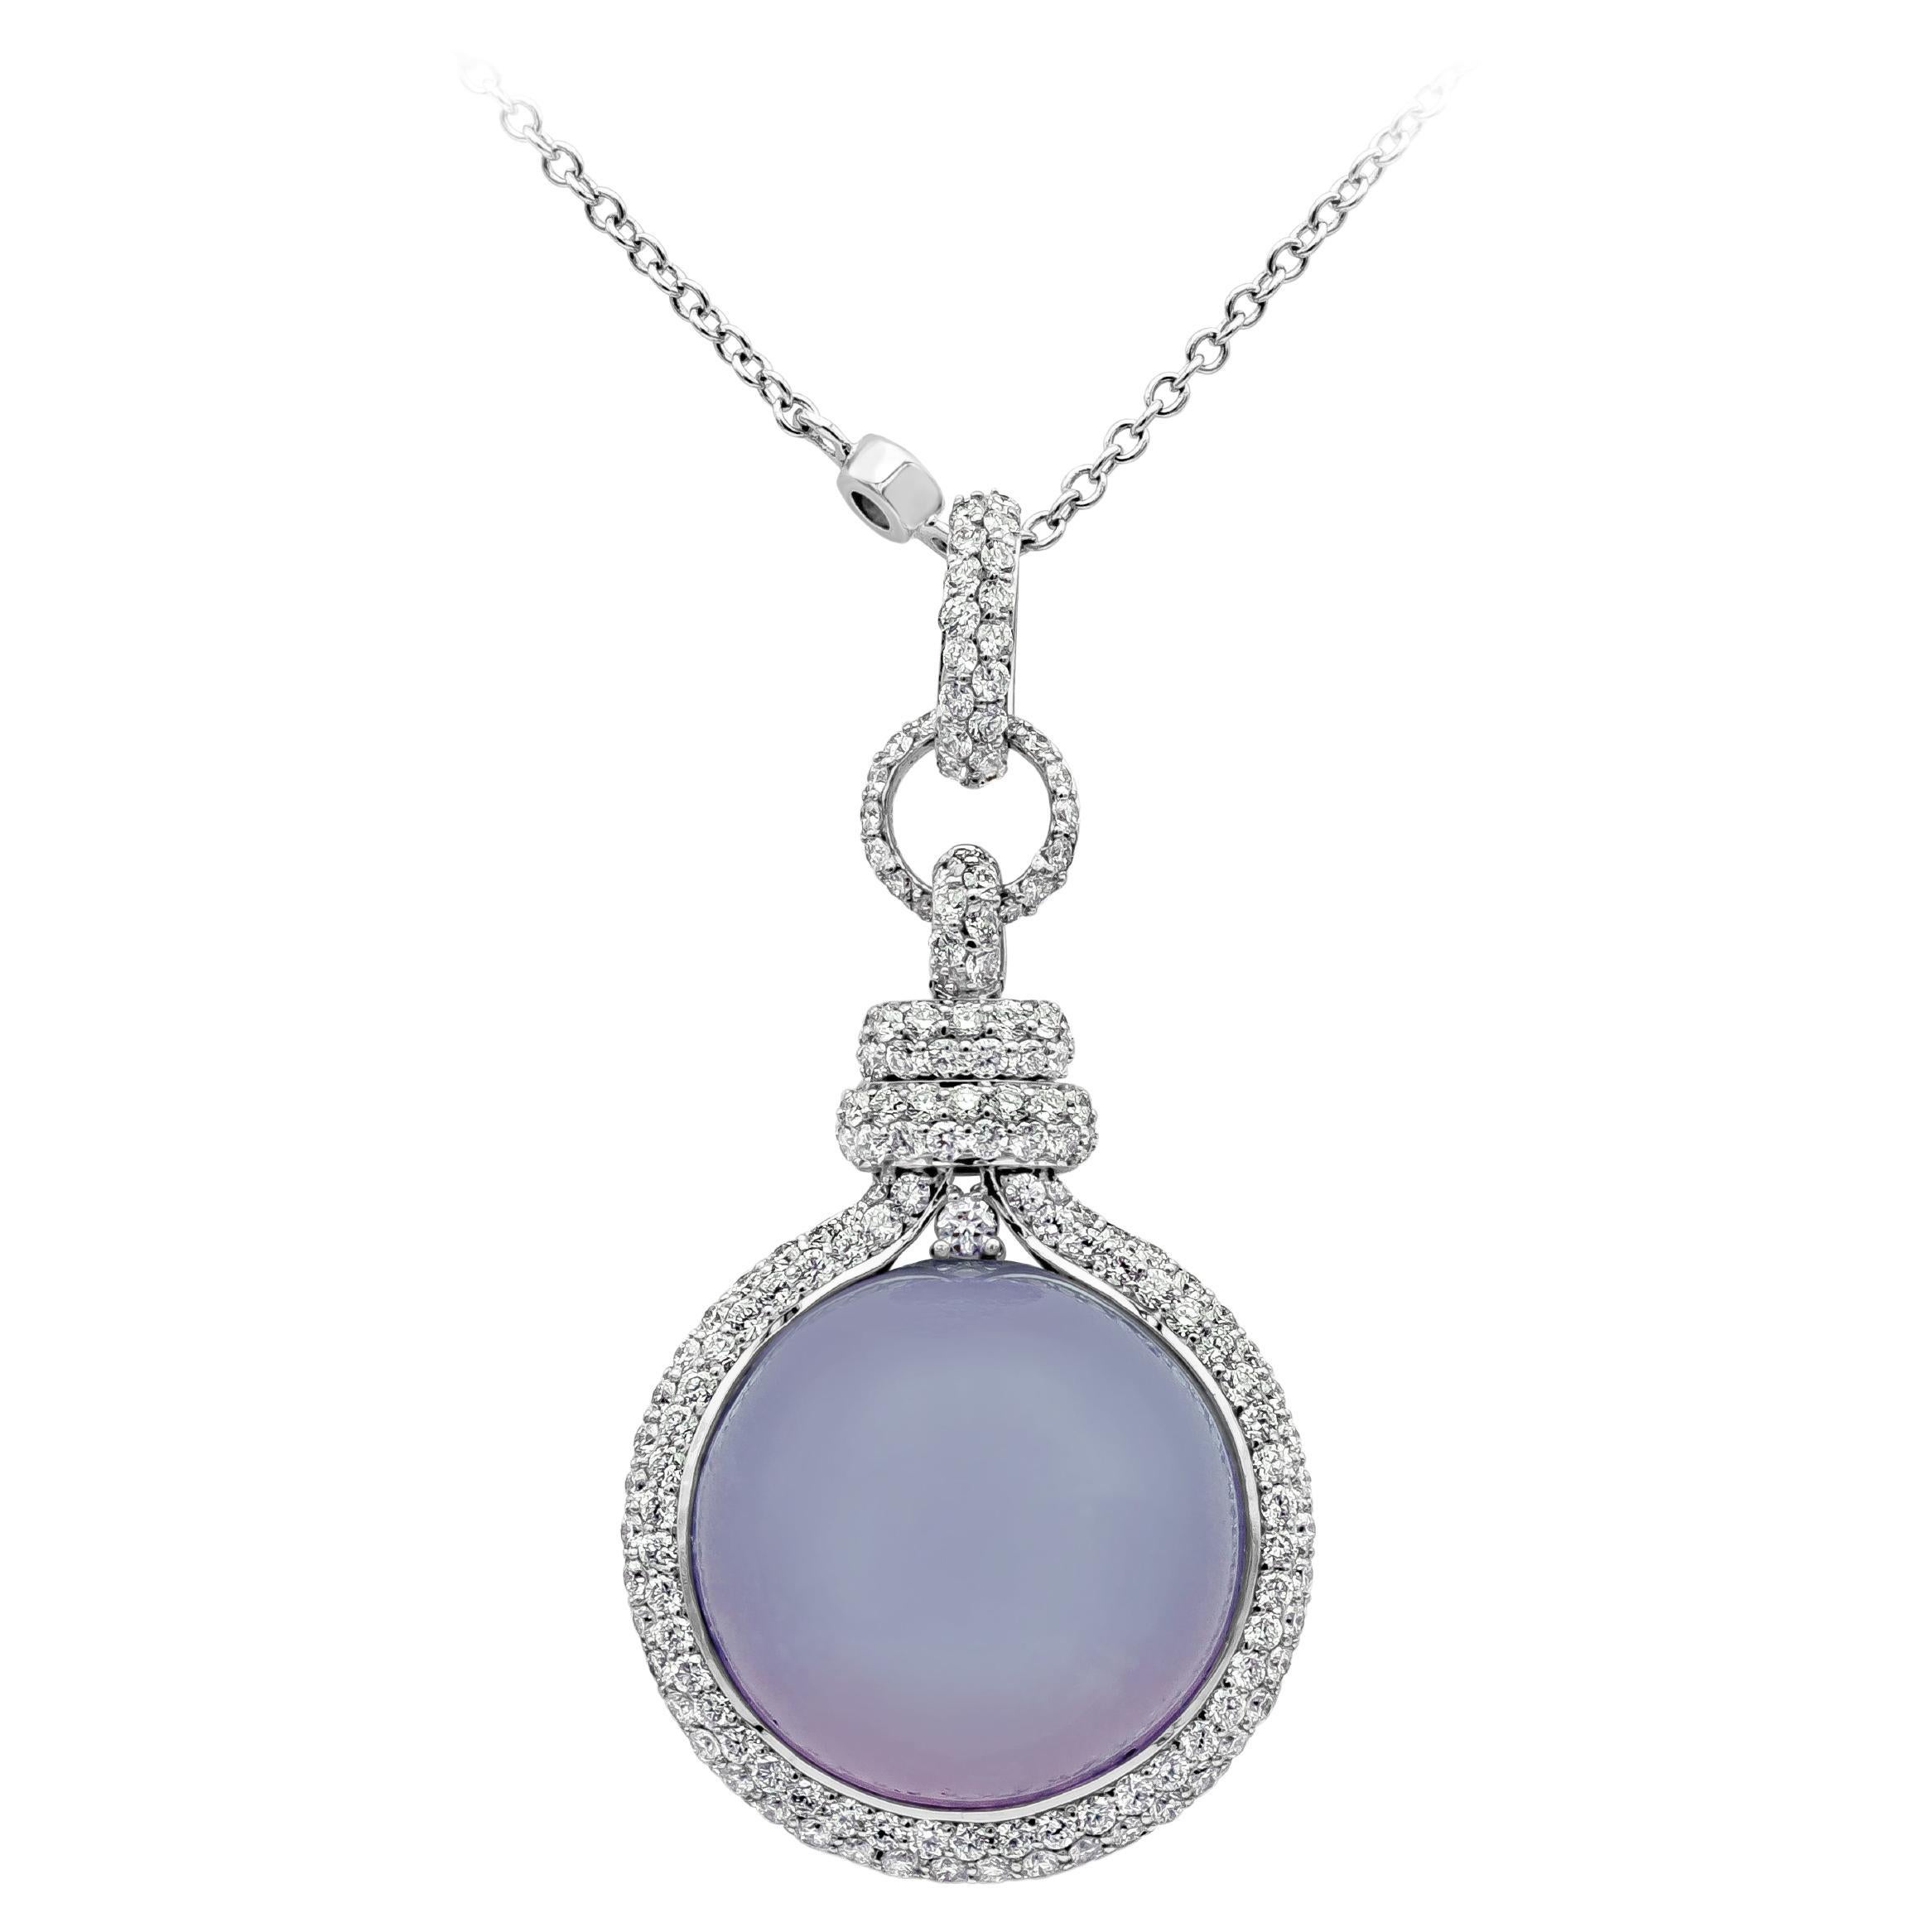 Roman Malakov 12.09 Carat Lavender Chalcedony and Diamond Pendant Necklace